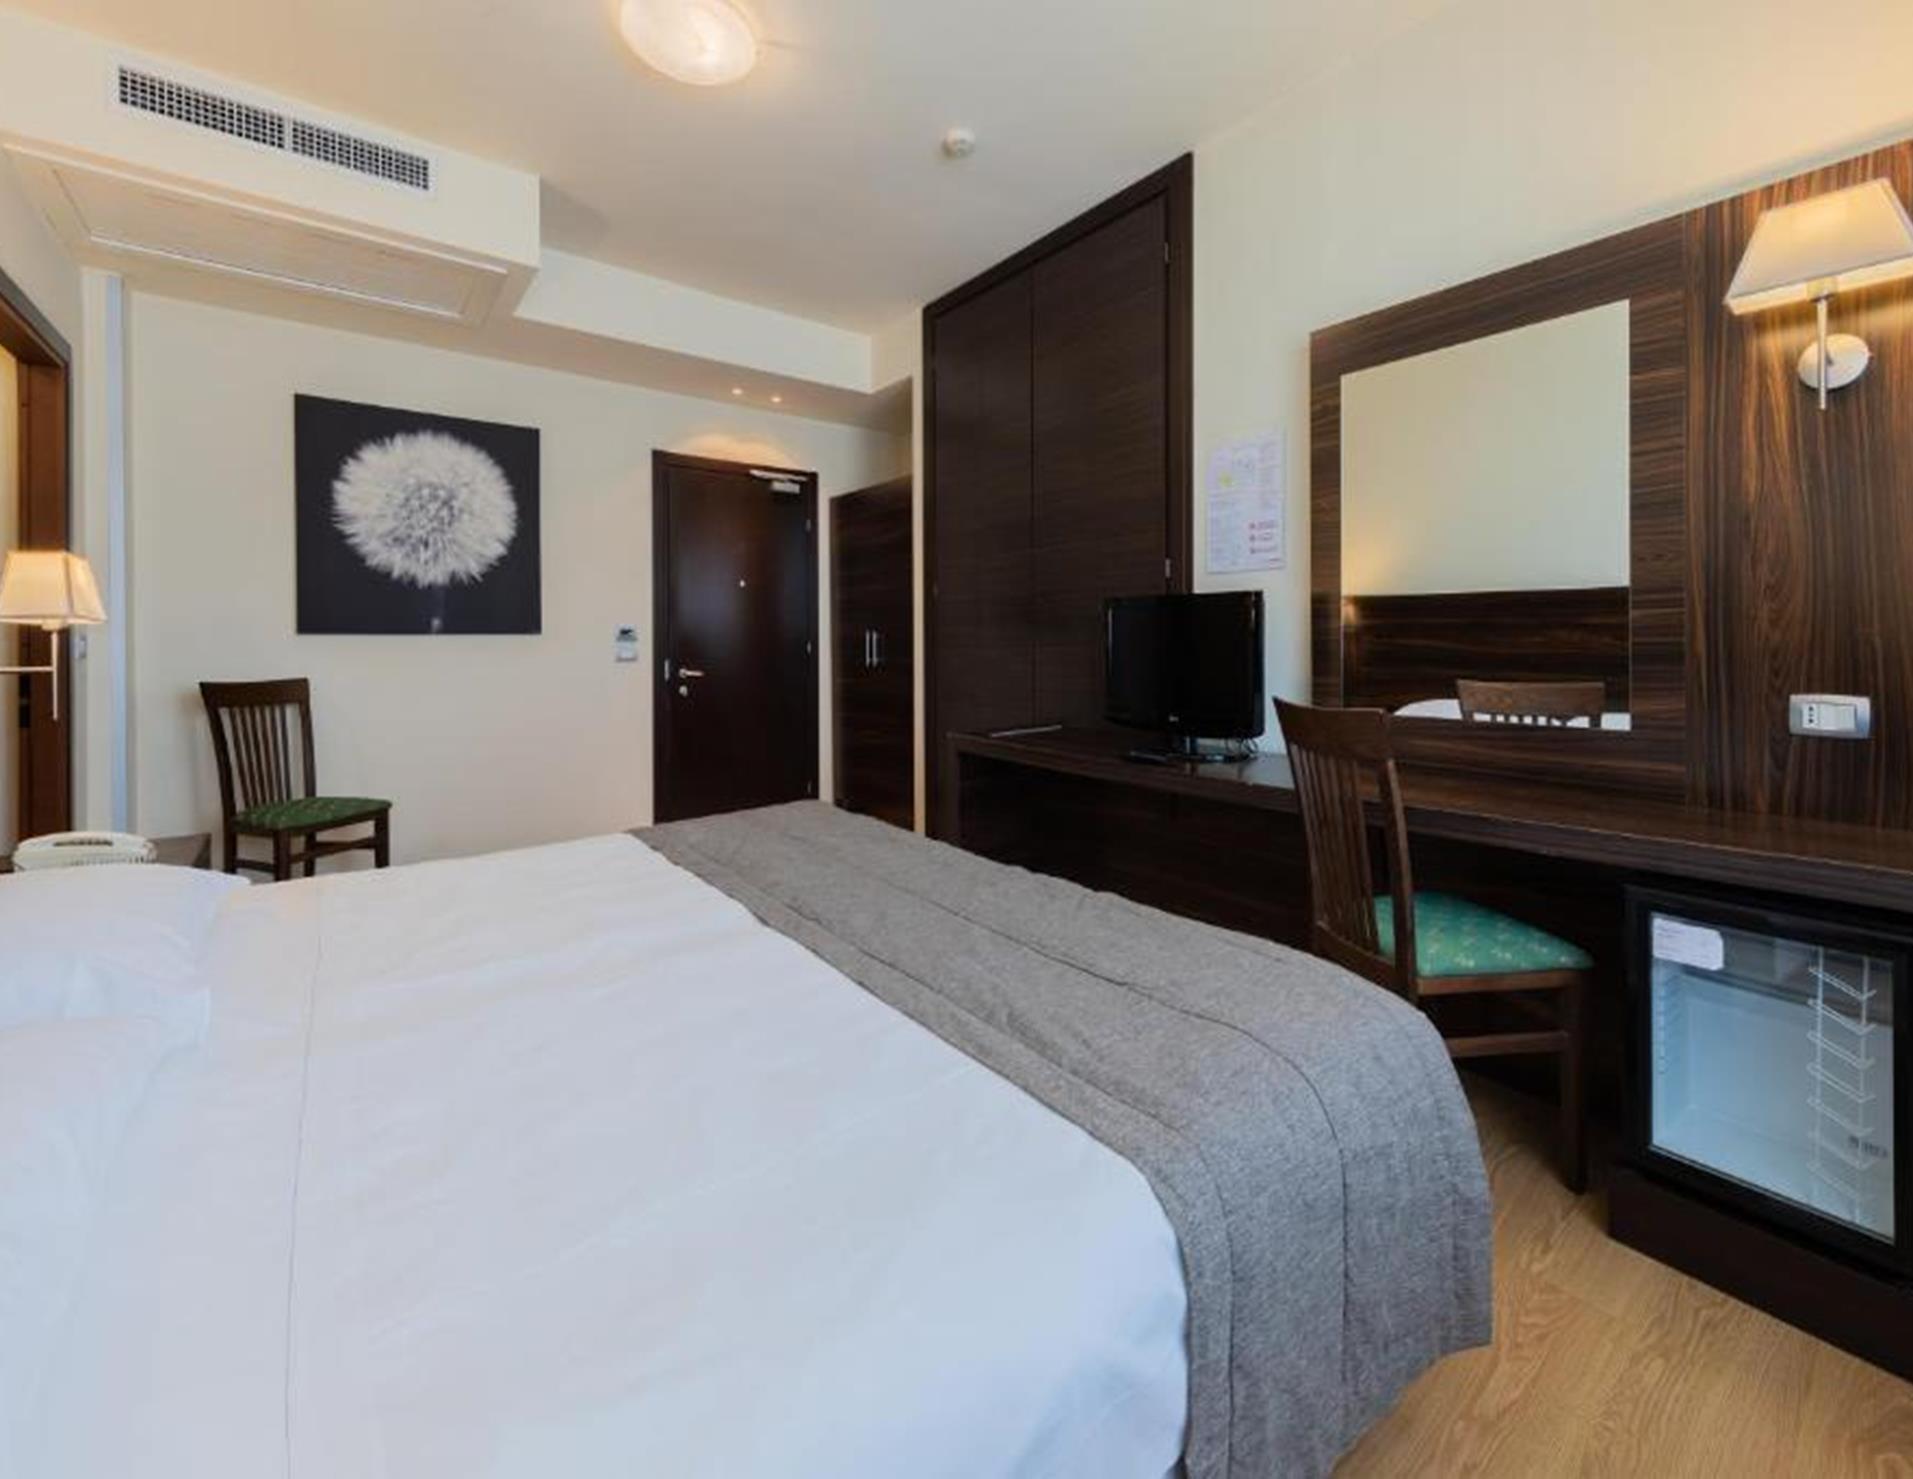 Quality Hotel Delfino - Room 5